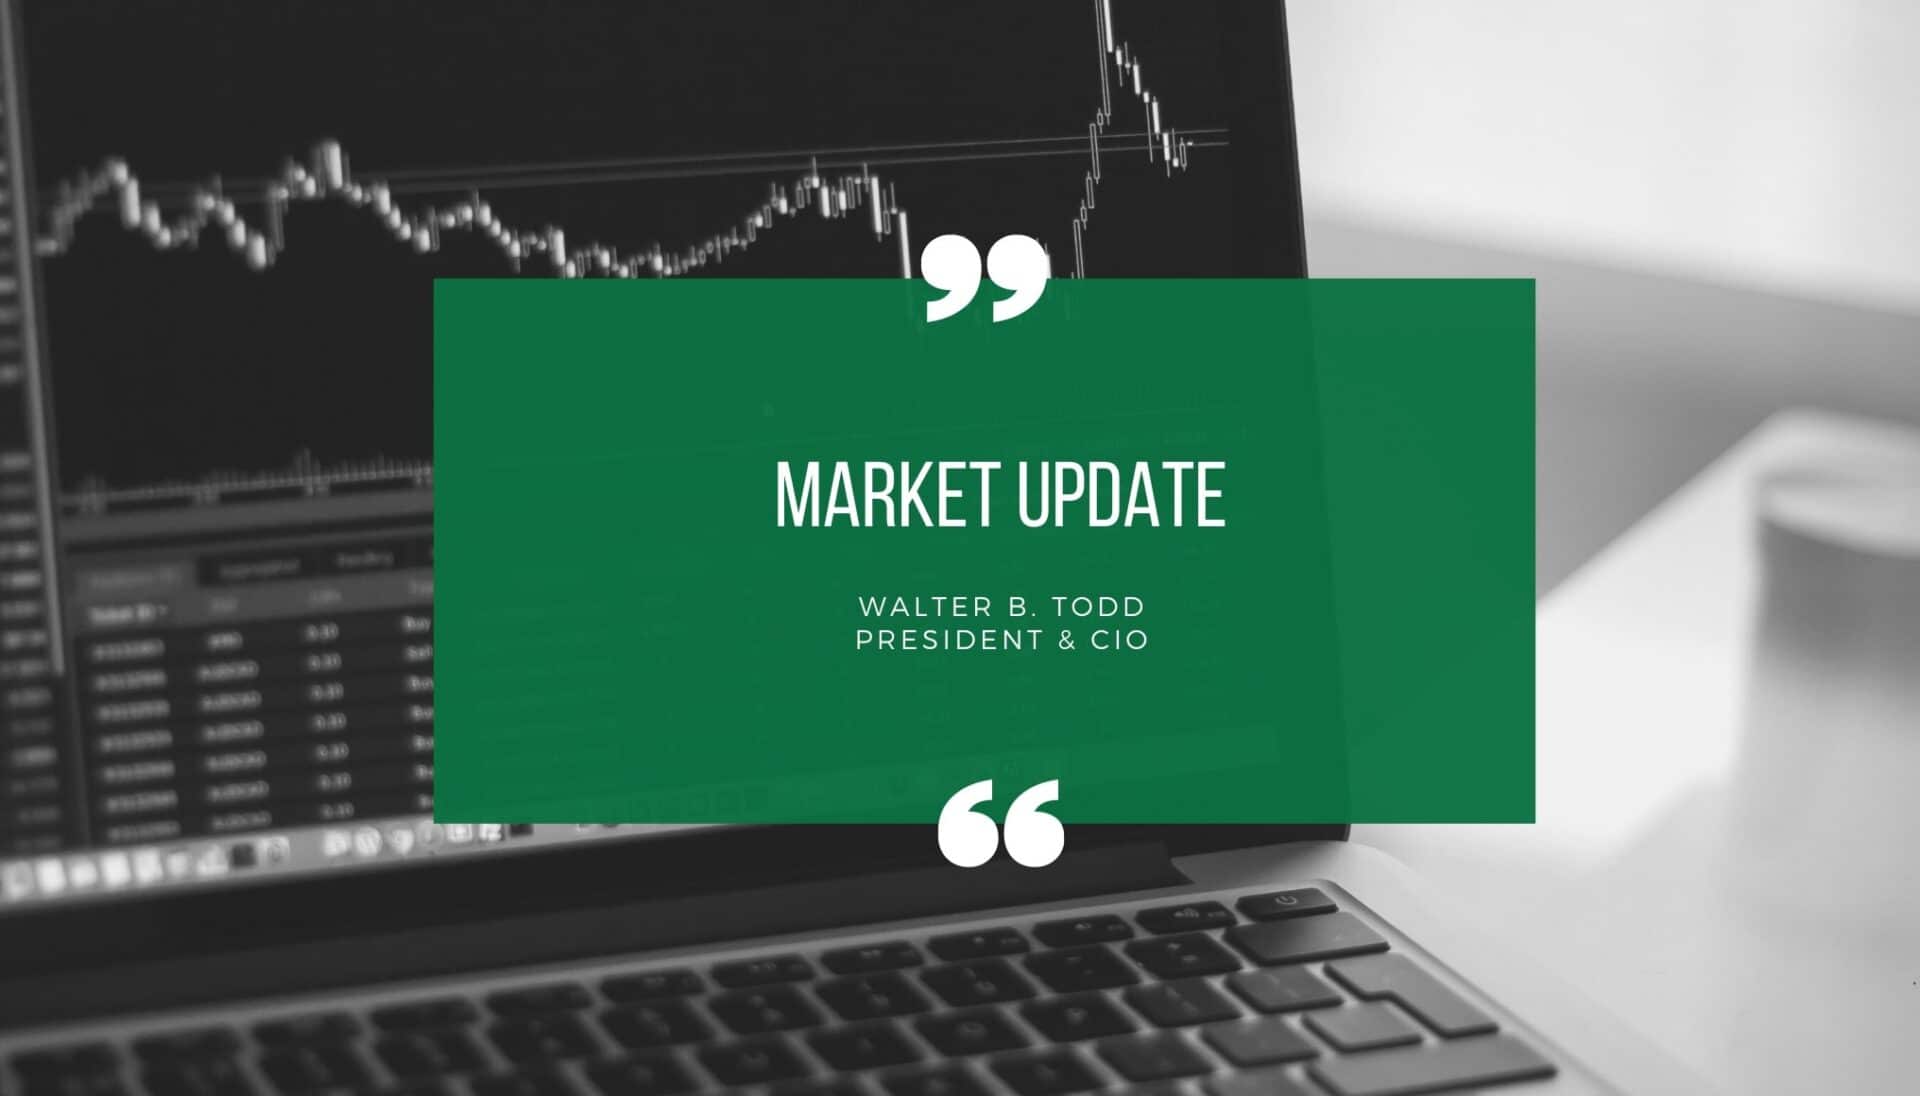 Market Update by Walter Todd